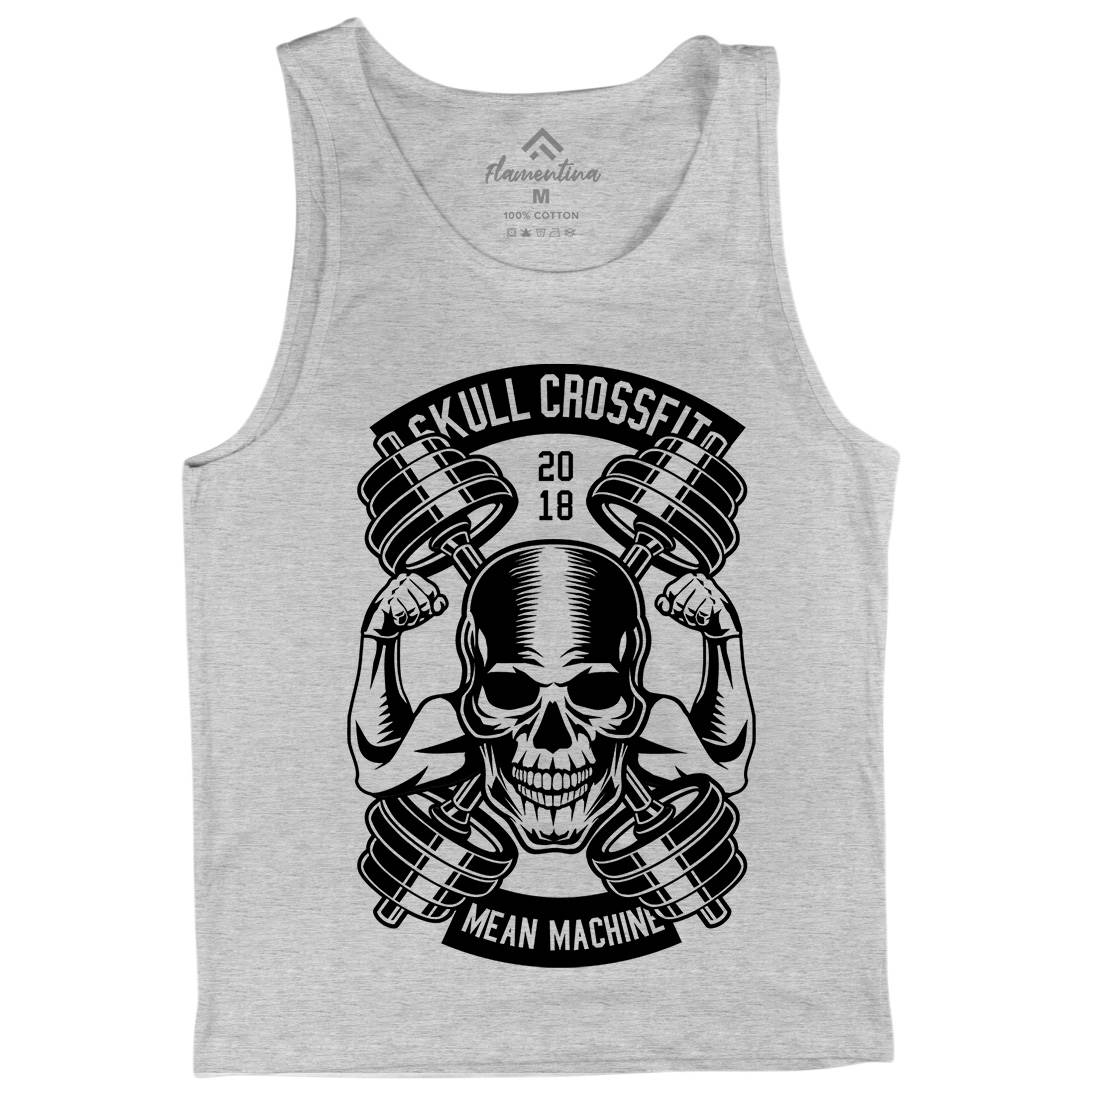 Skull Cross Fit Mens Tank Top Vest Gym B627